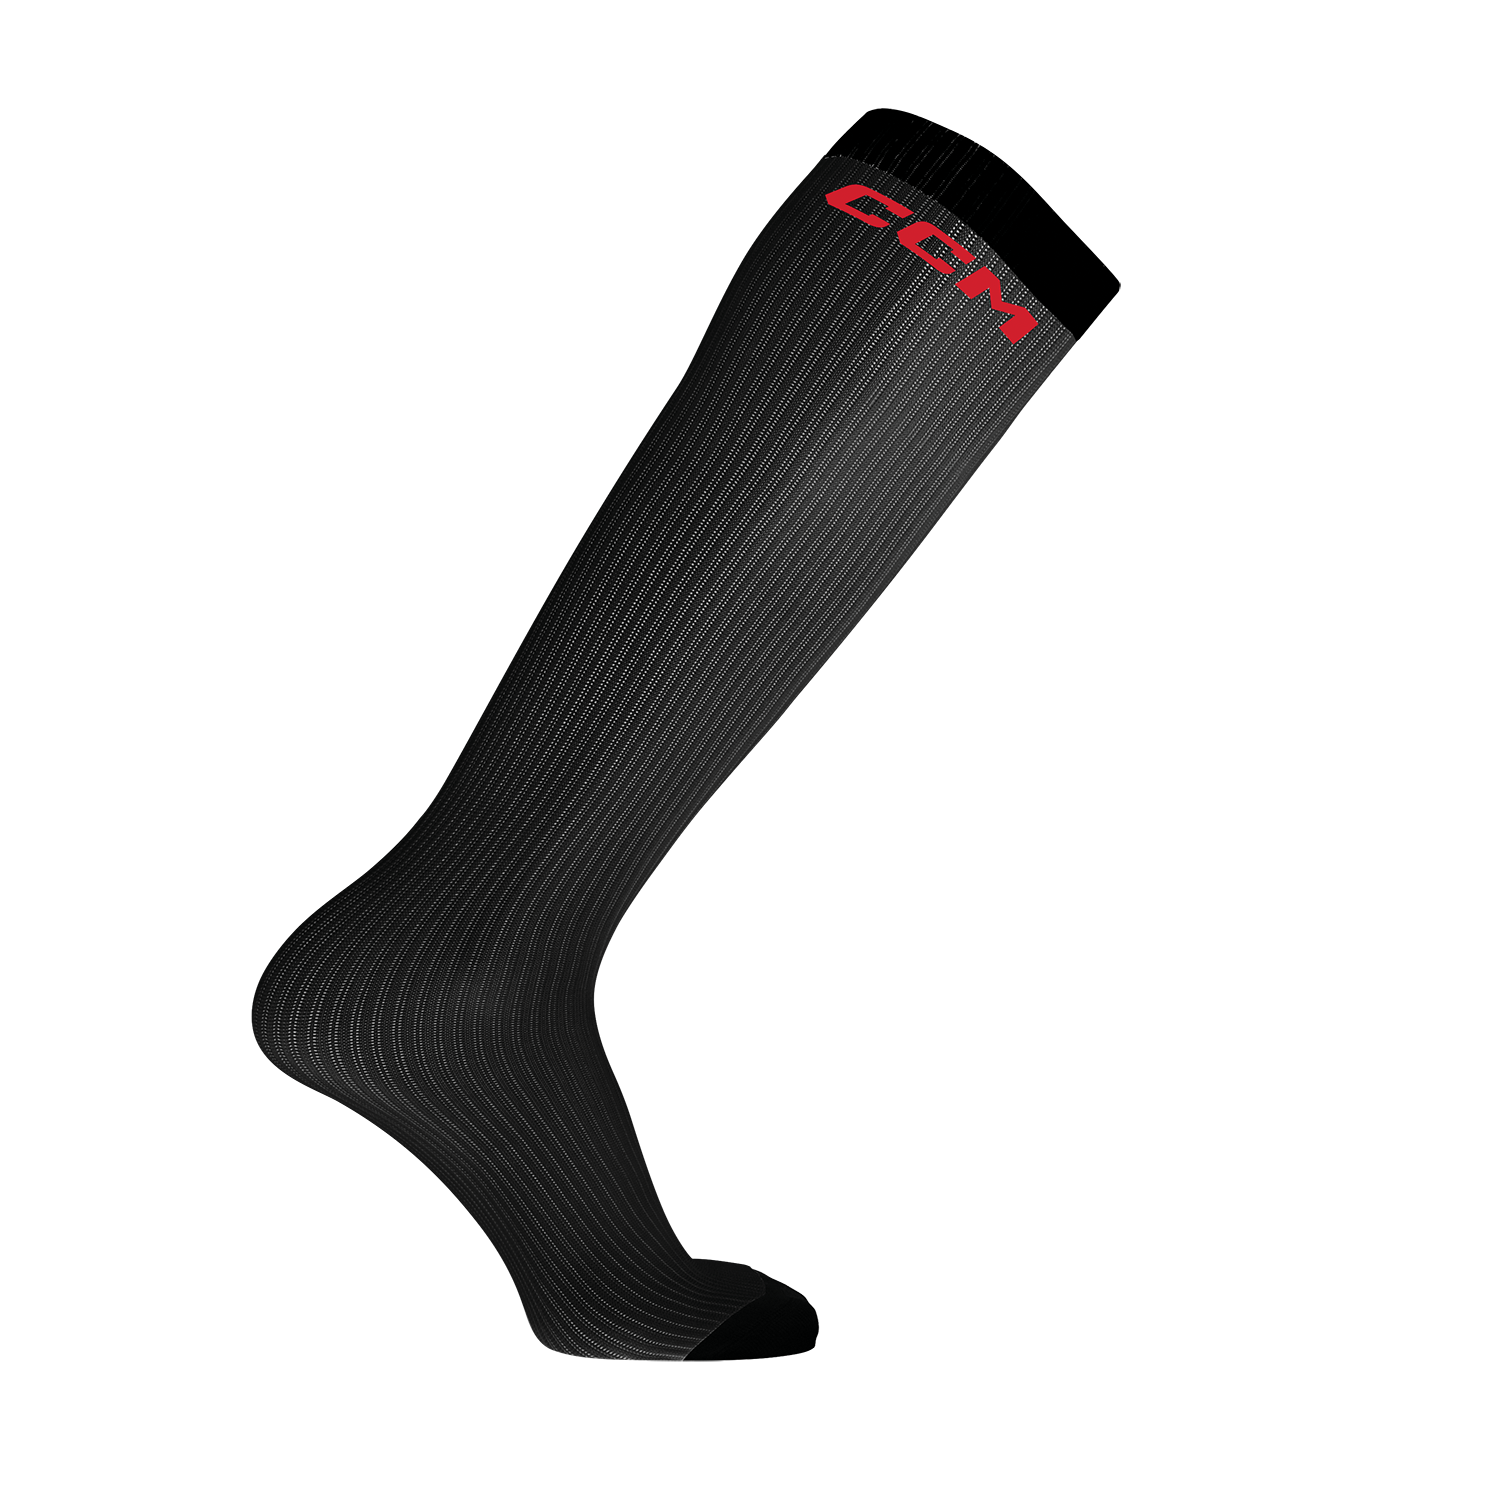 CCM Carbon Hockey Liner Socks